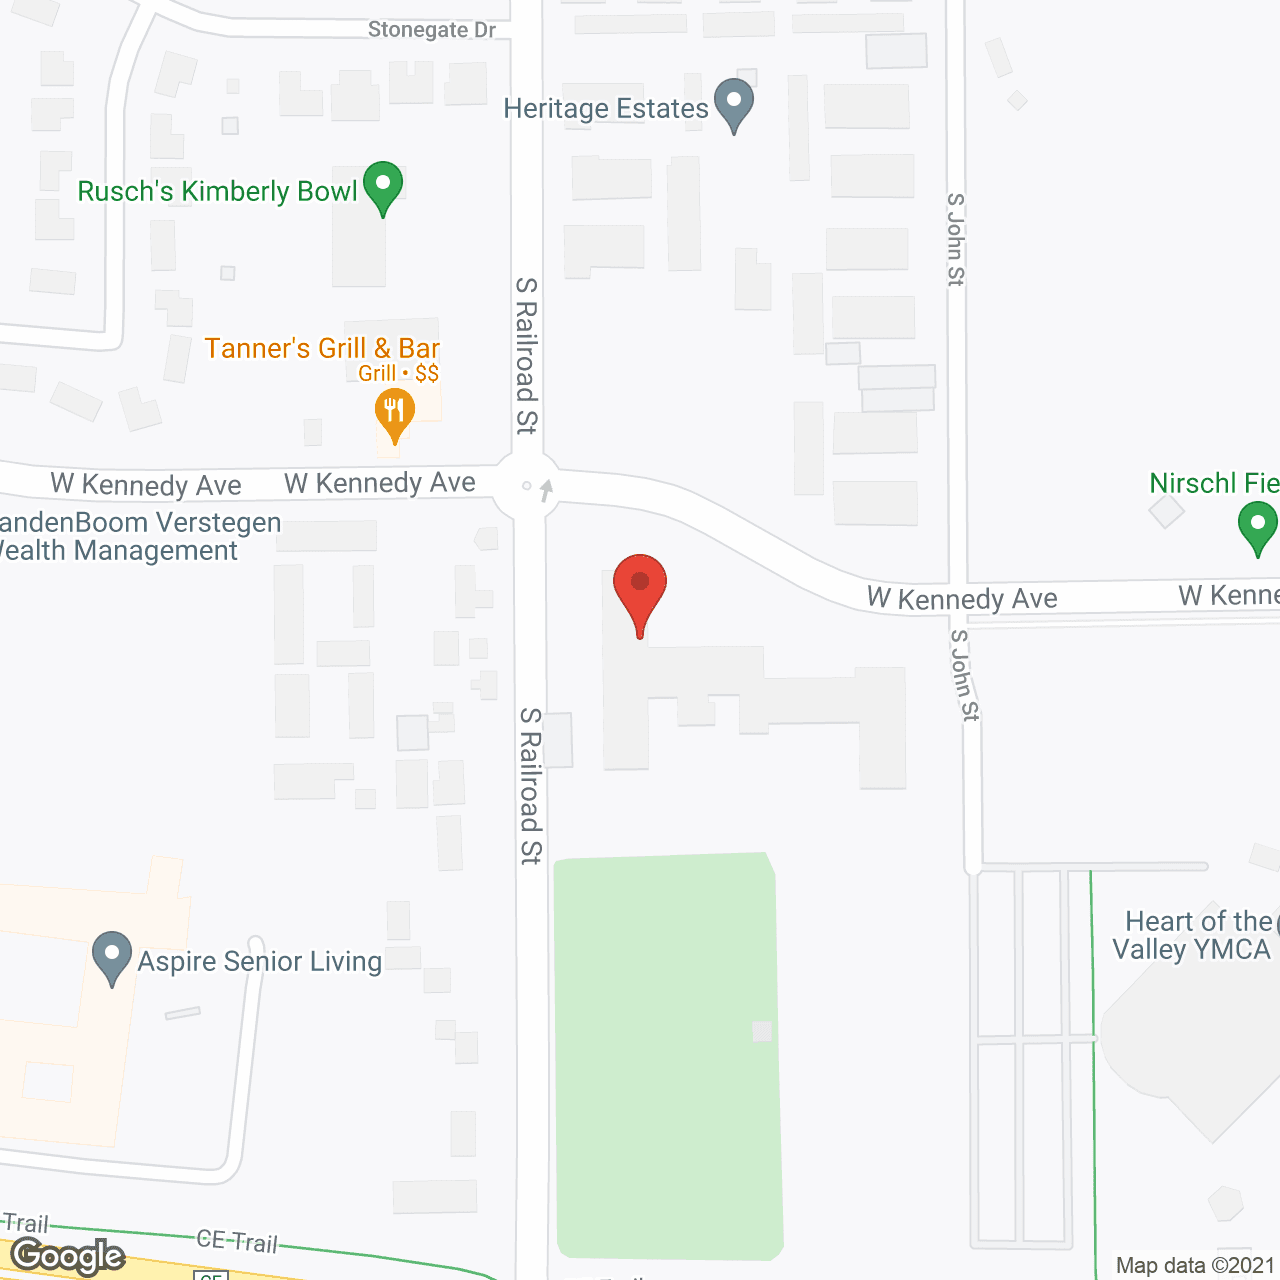 Hallmark Place in google map